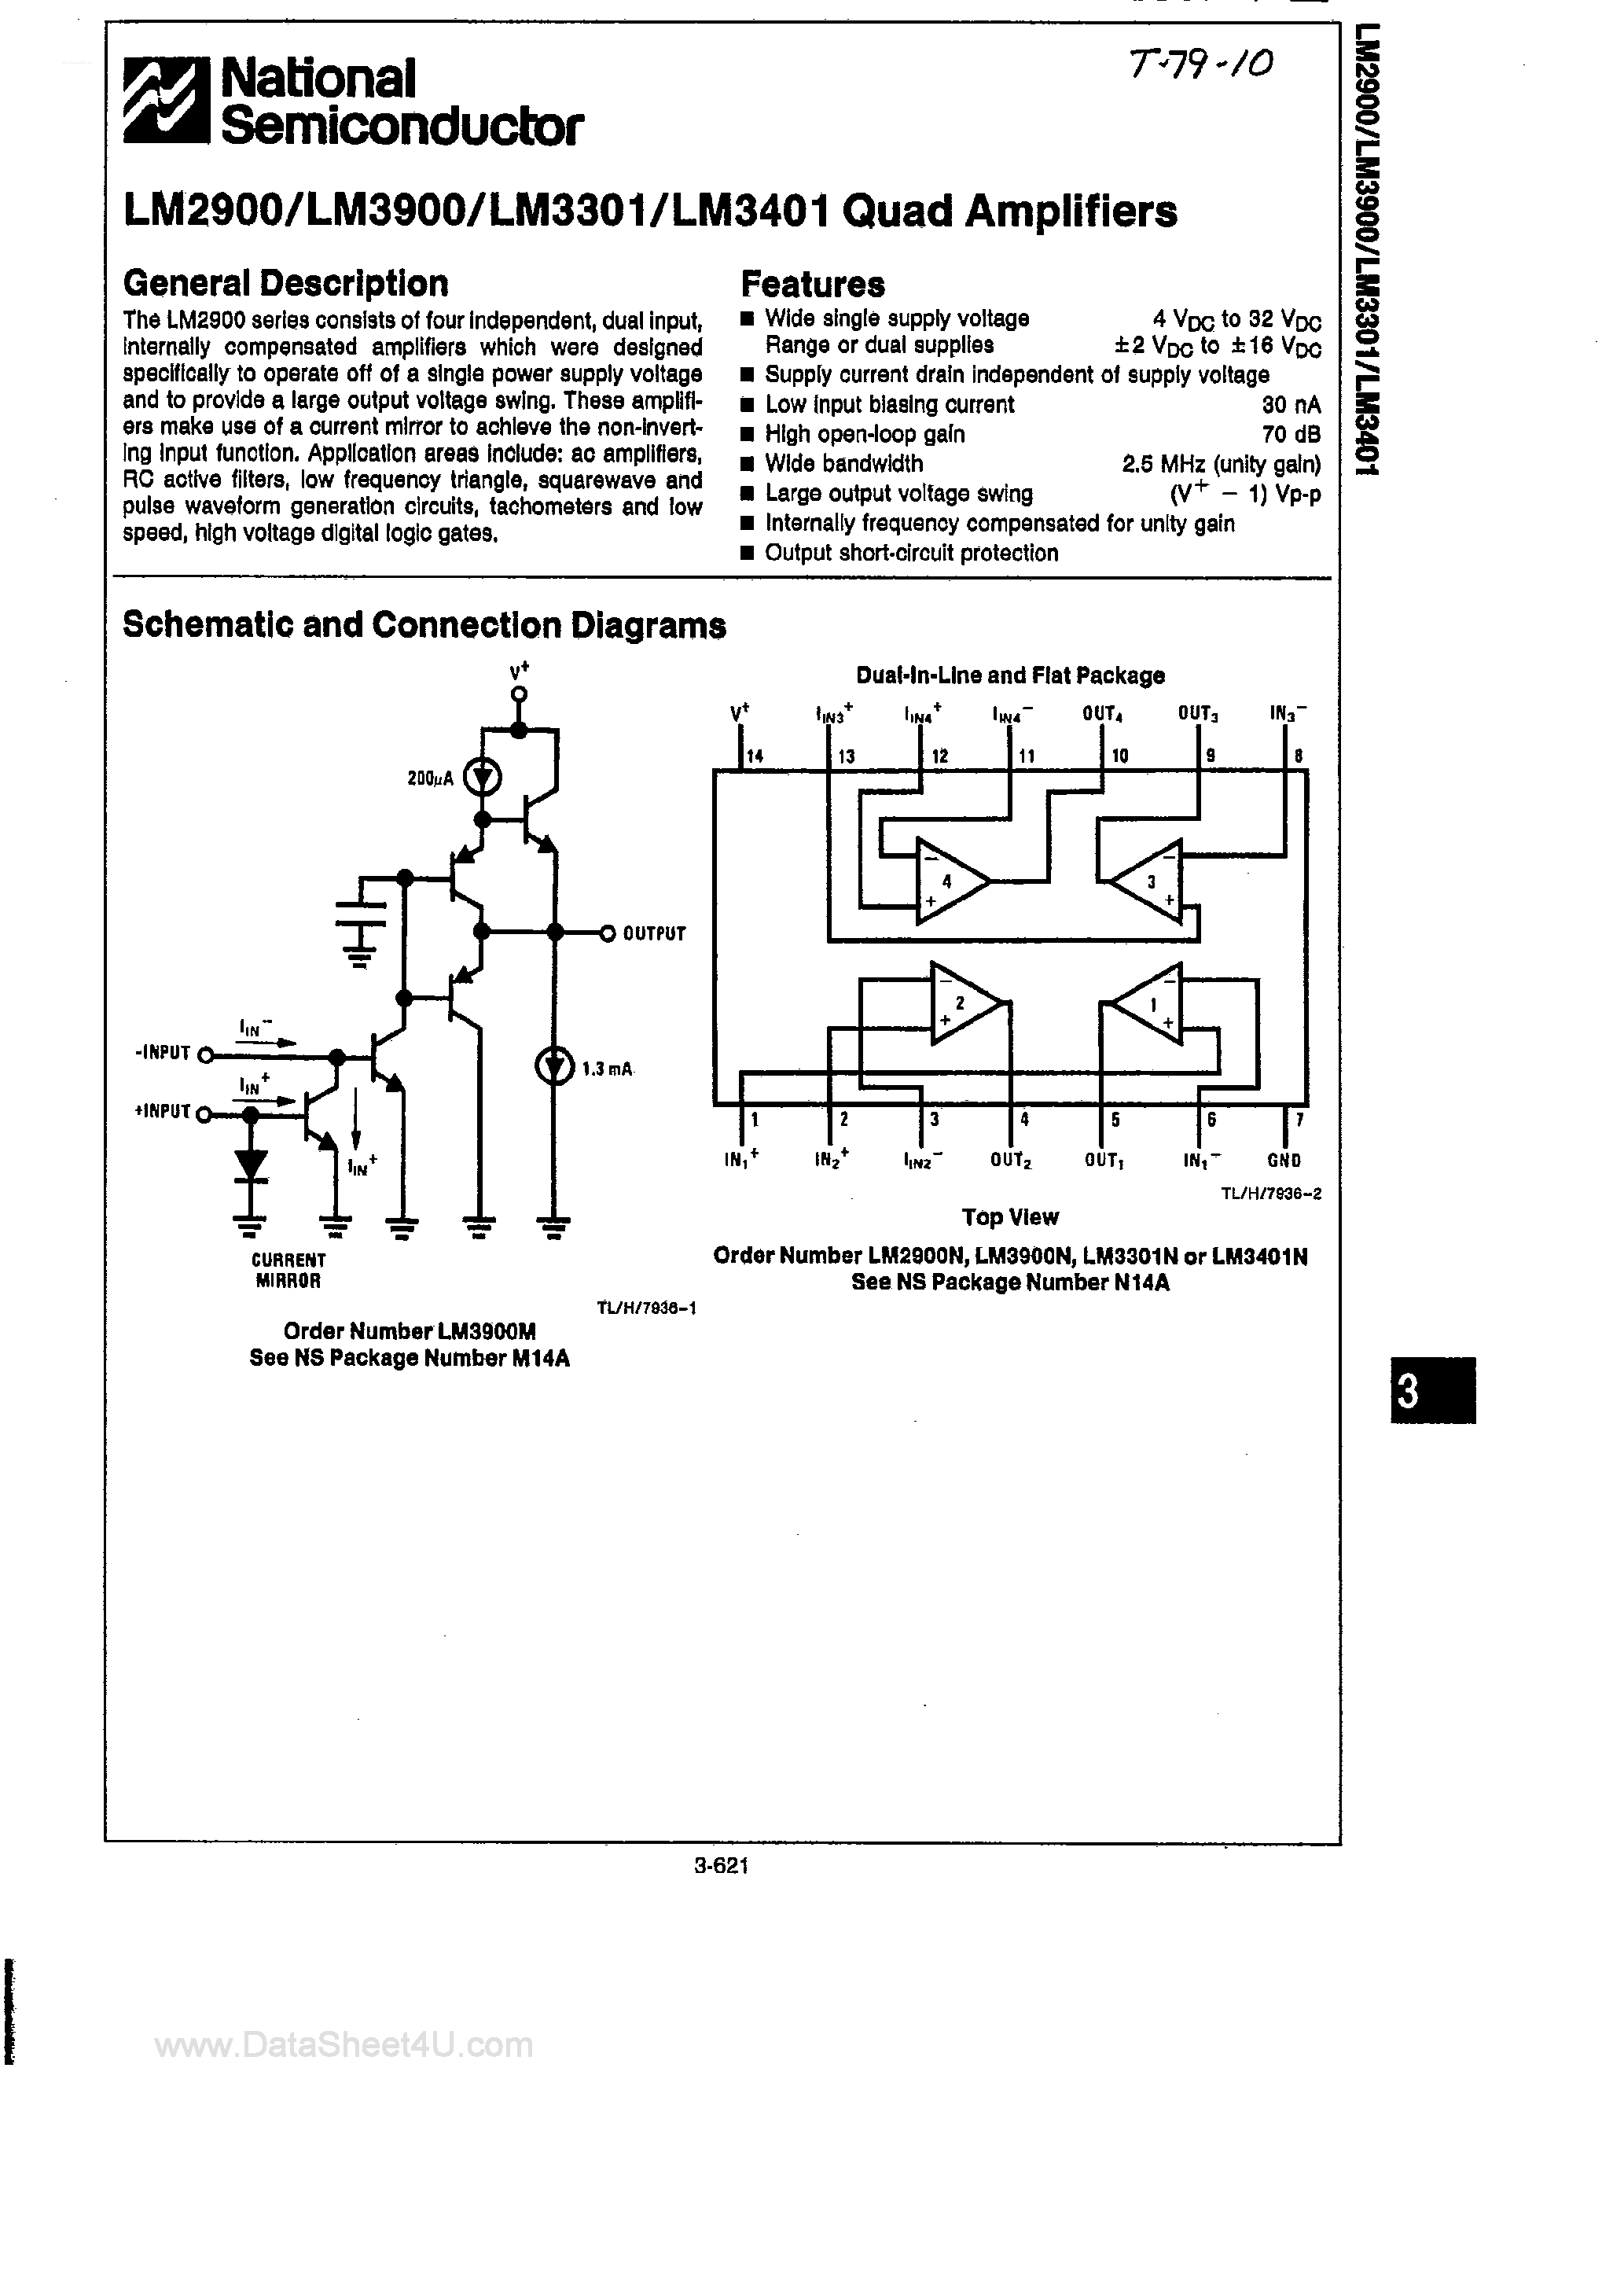 Datasheet LM3401 - (LM3900 / LM3901 / LM3401) Quad Amplifiers page 1